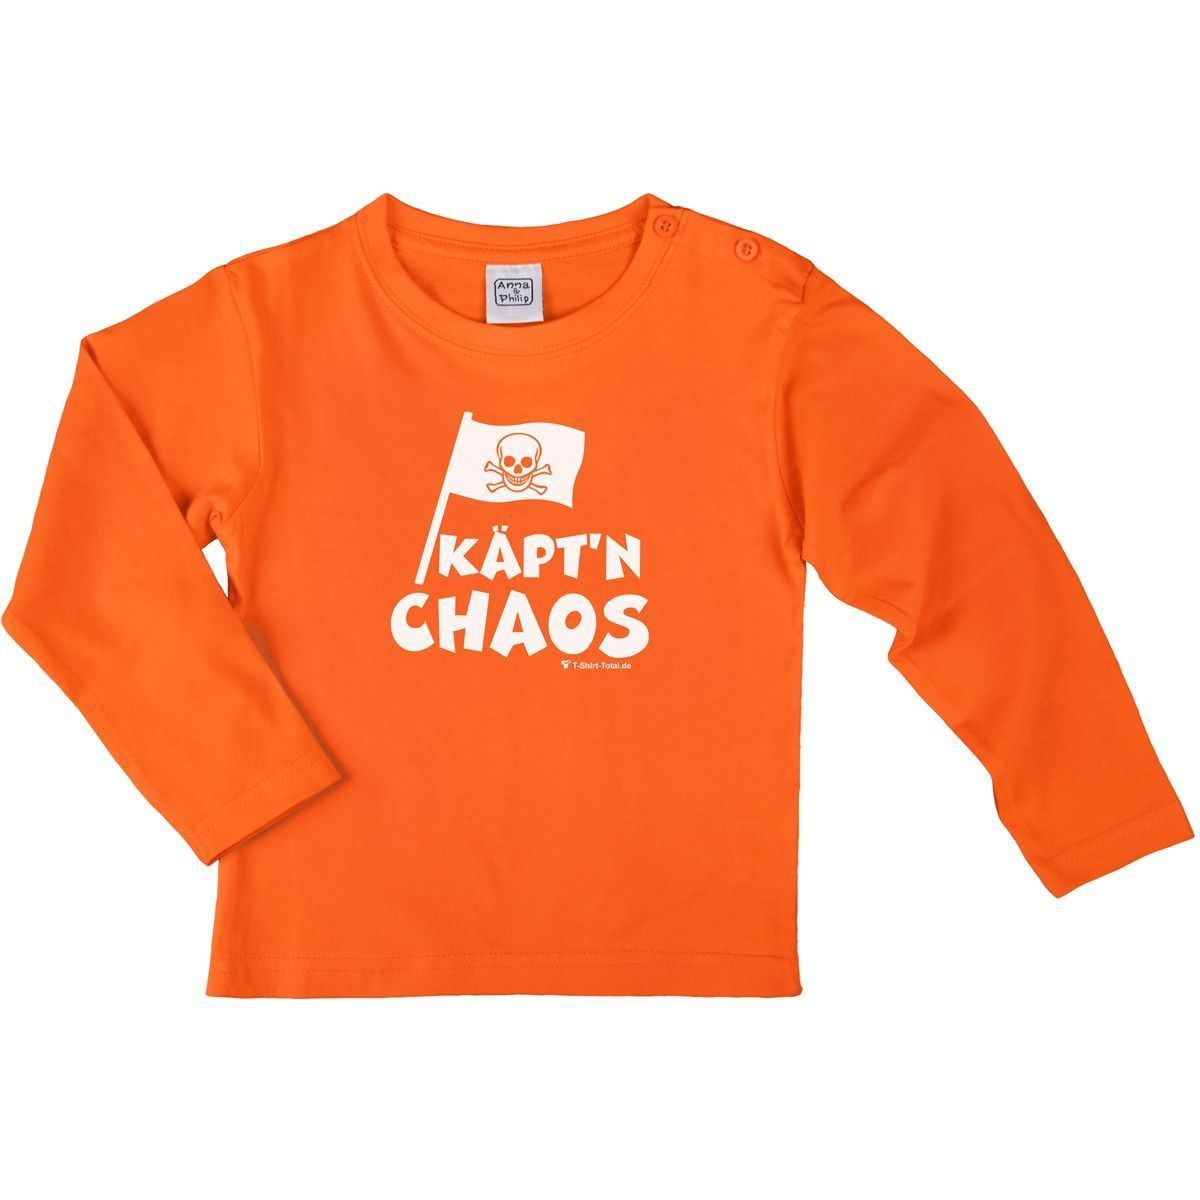 Käptn Chaos Kinder Langarm Shirt orange 134 / 140